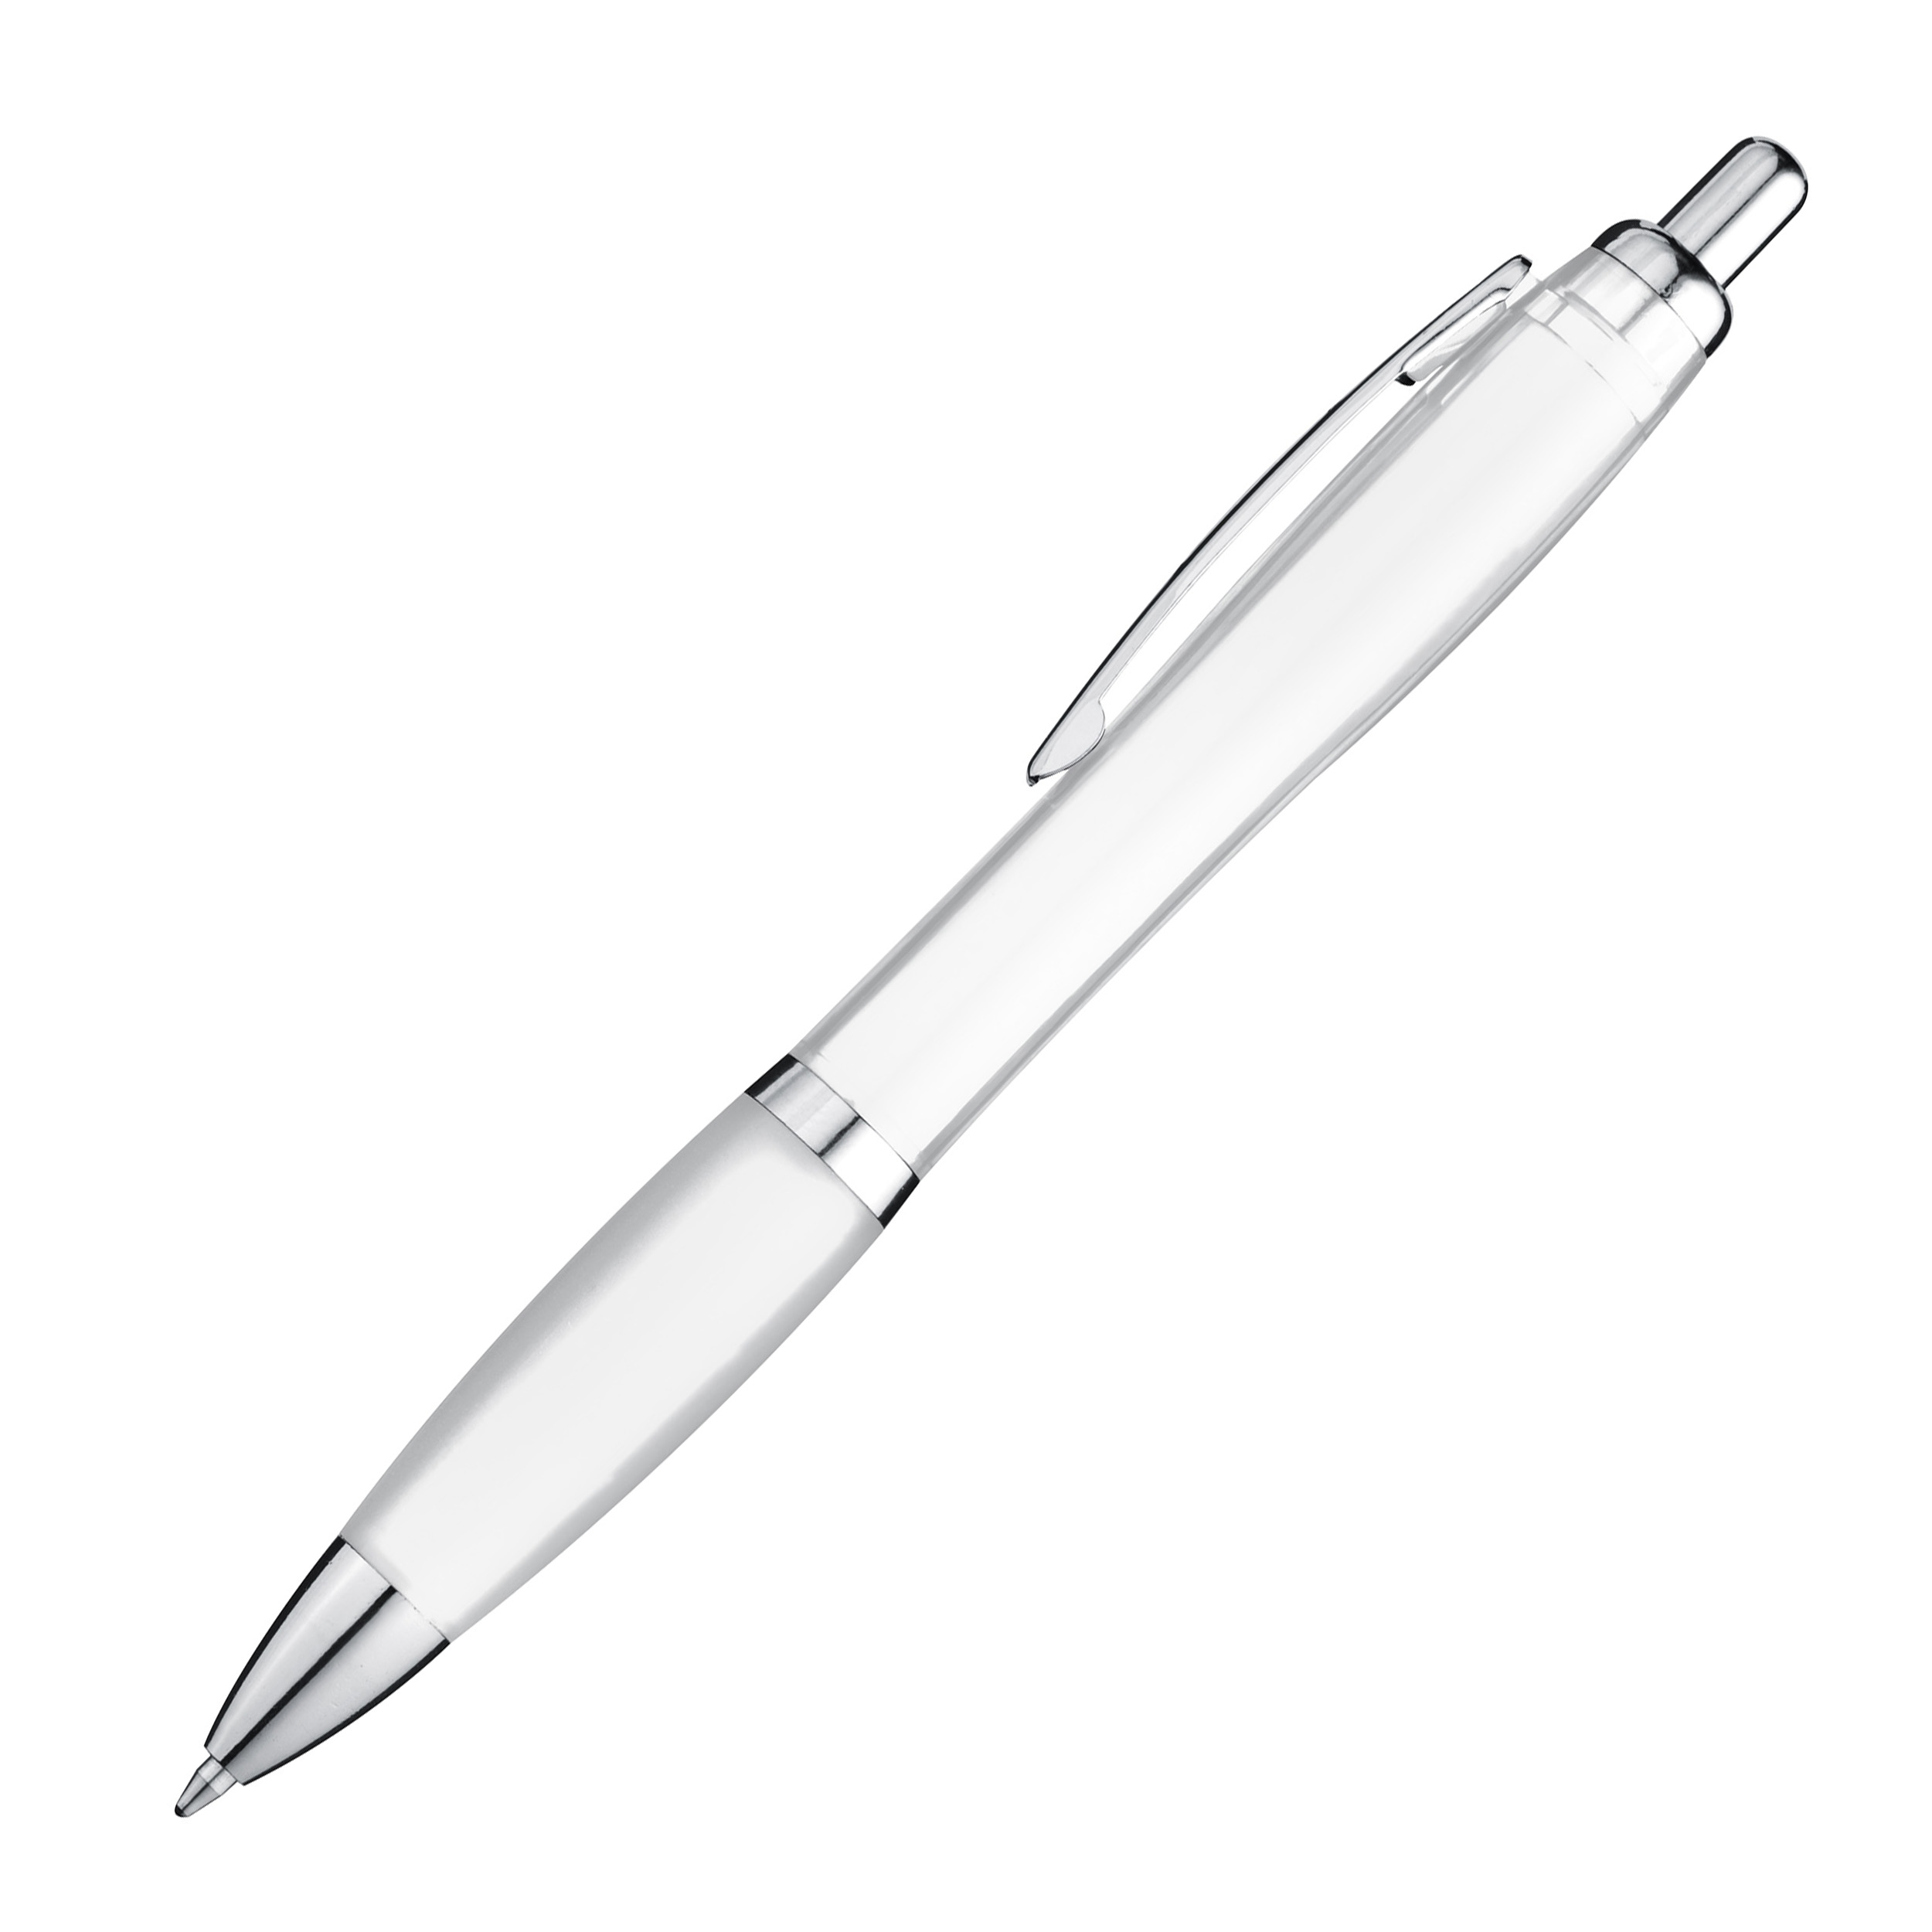 Kugelschreiber mit farbig transparentem Schaft 